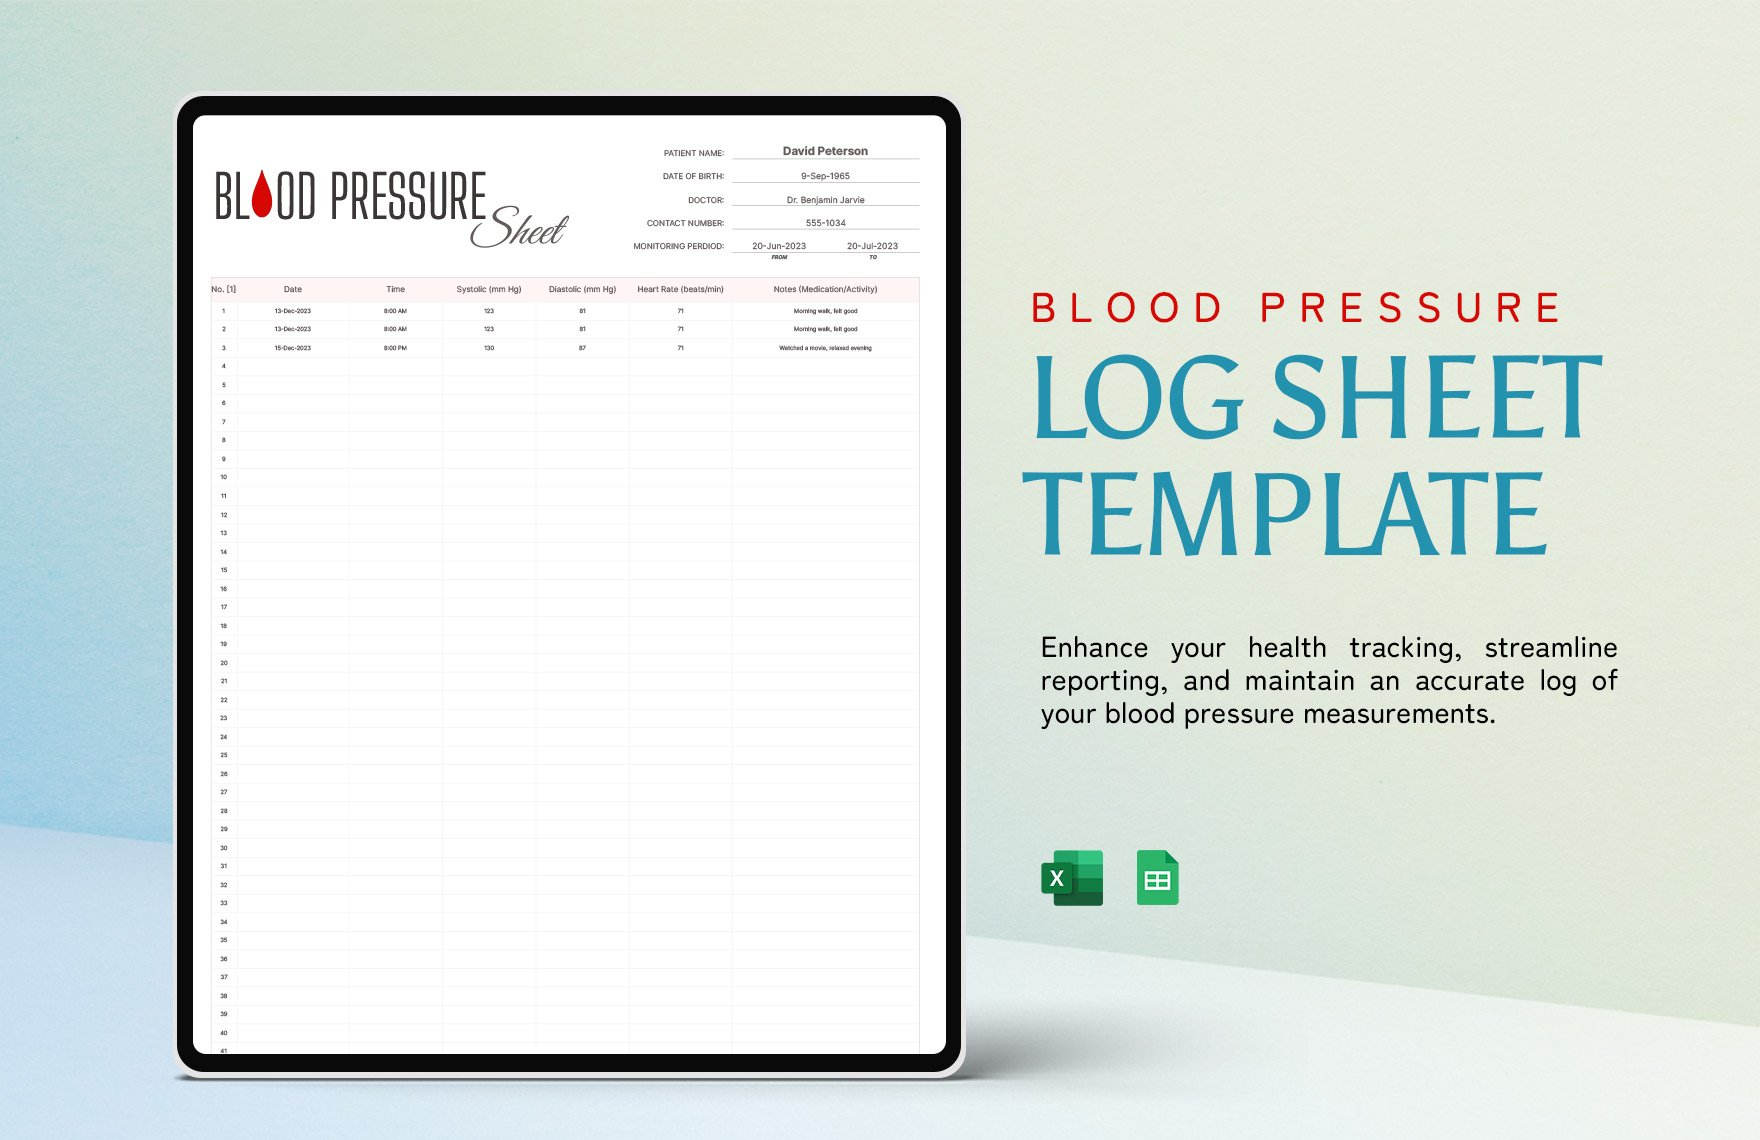 Blood Pressure Log Sheet Template in Excel, Google Sheets